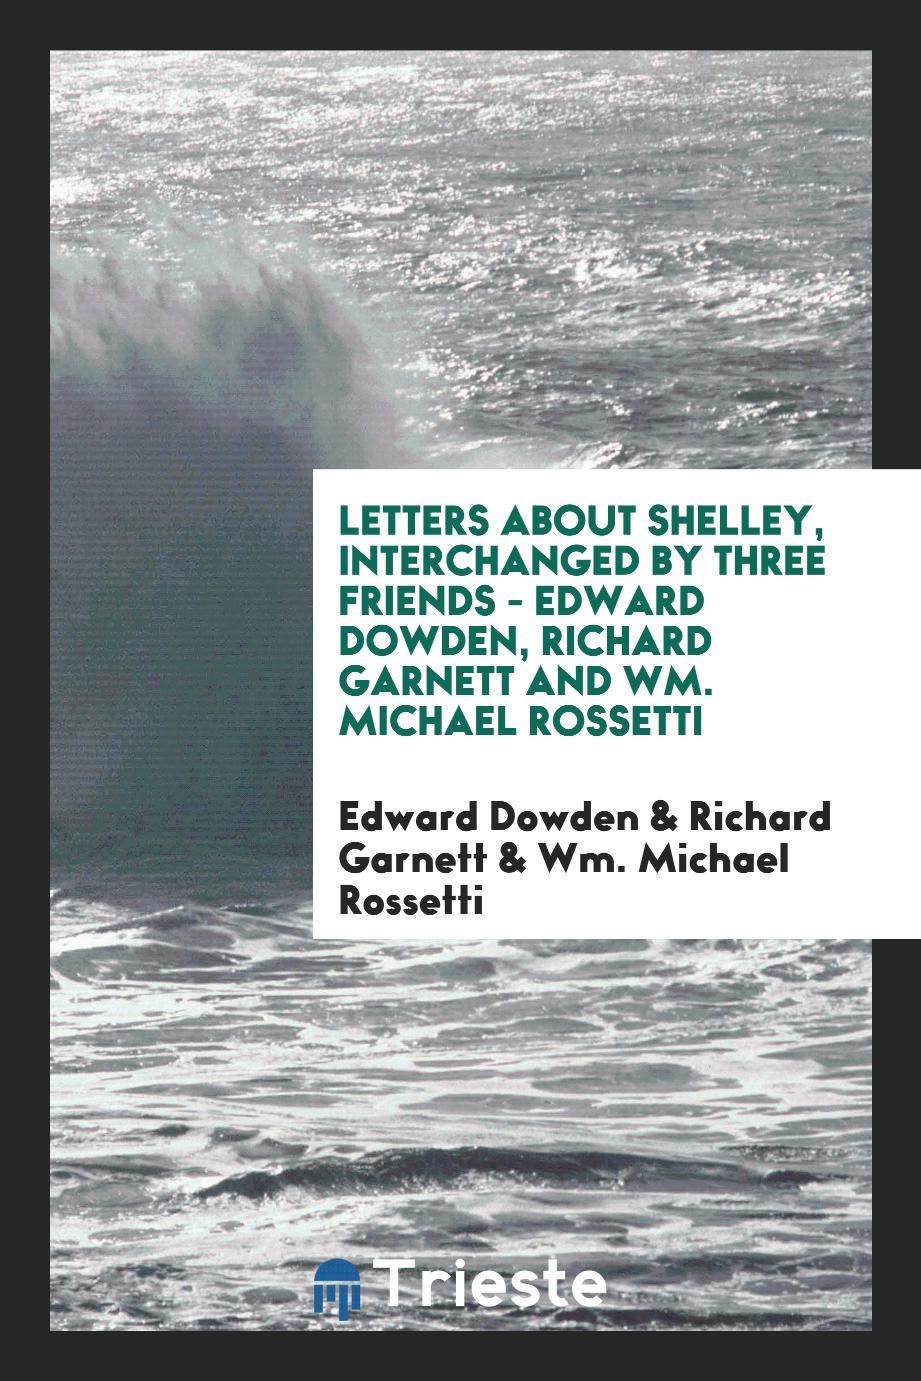 Letters about Shelley, interchanged by three friends - Edward Dowden, Richard Garnett and Wm. Michael Rossetti